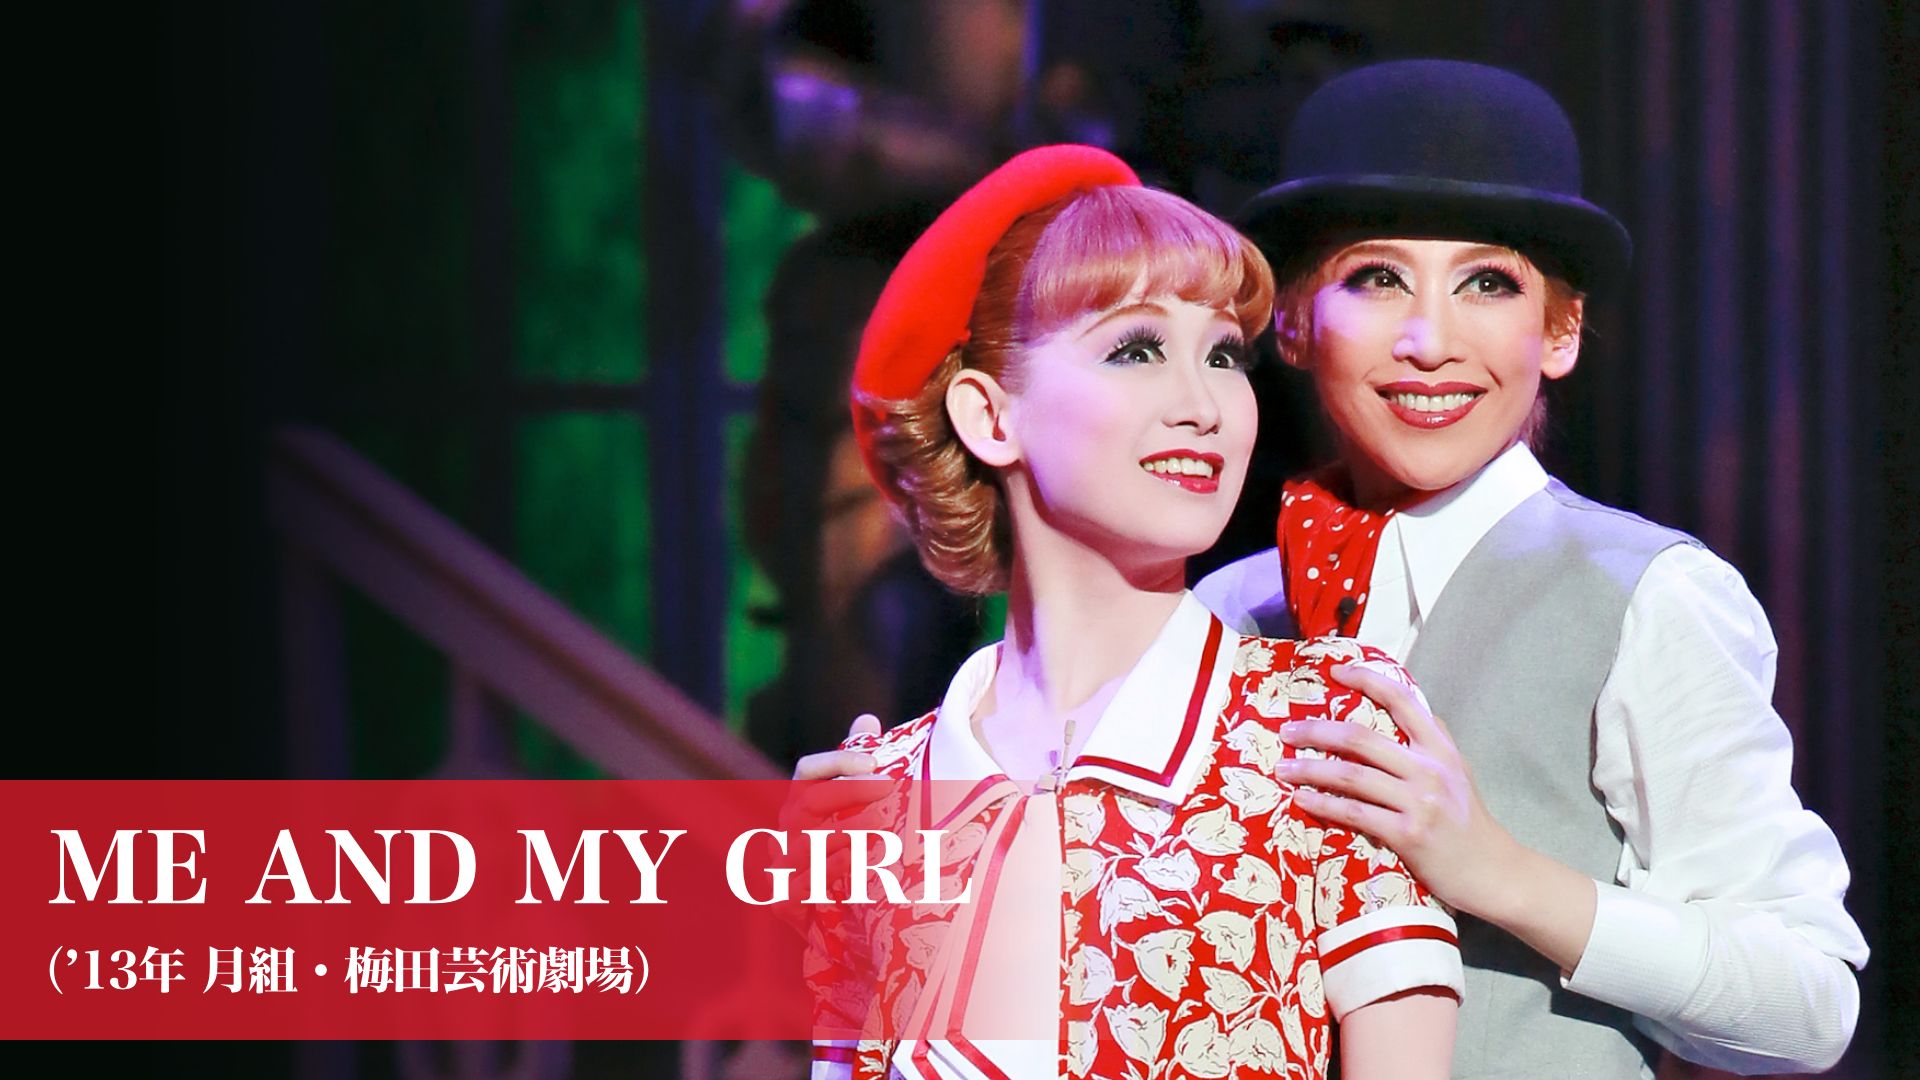 ME AND MY GIRL(’13年月組・梅田芸術劇場)